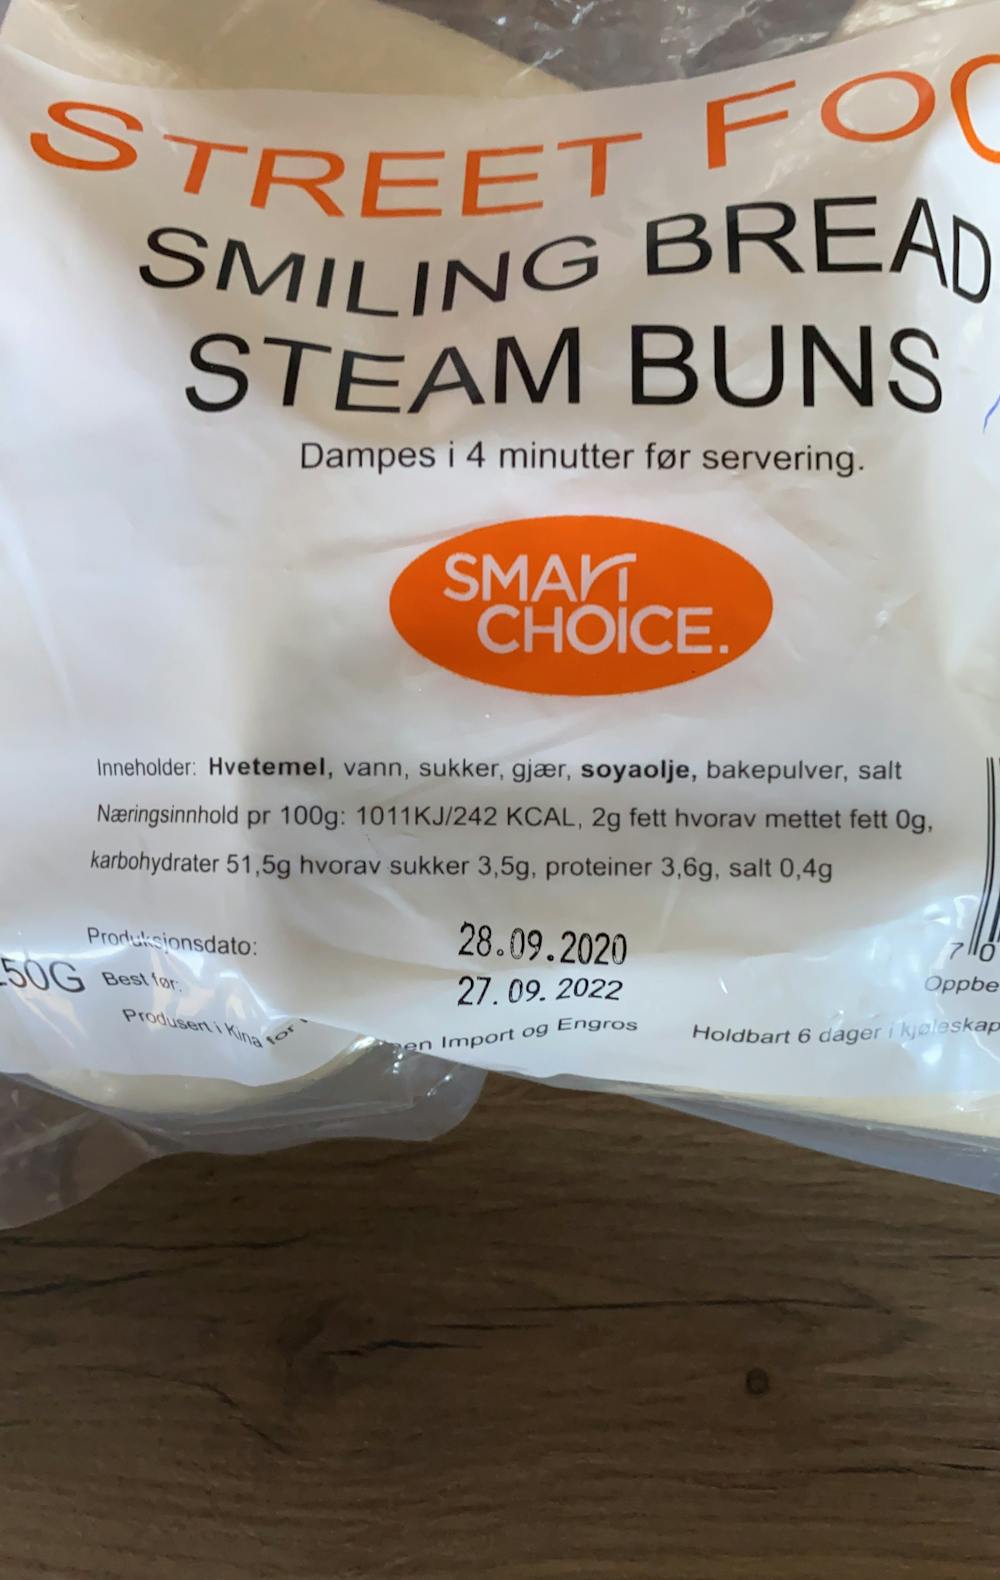 Ingredienslisten til Smart choice Street food, smiling bread steam buns